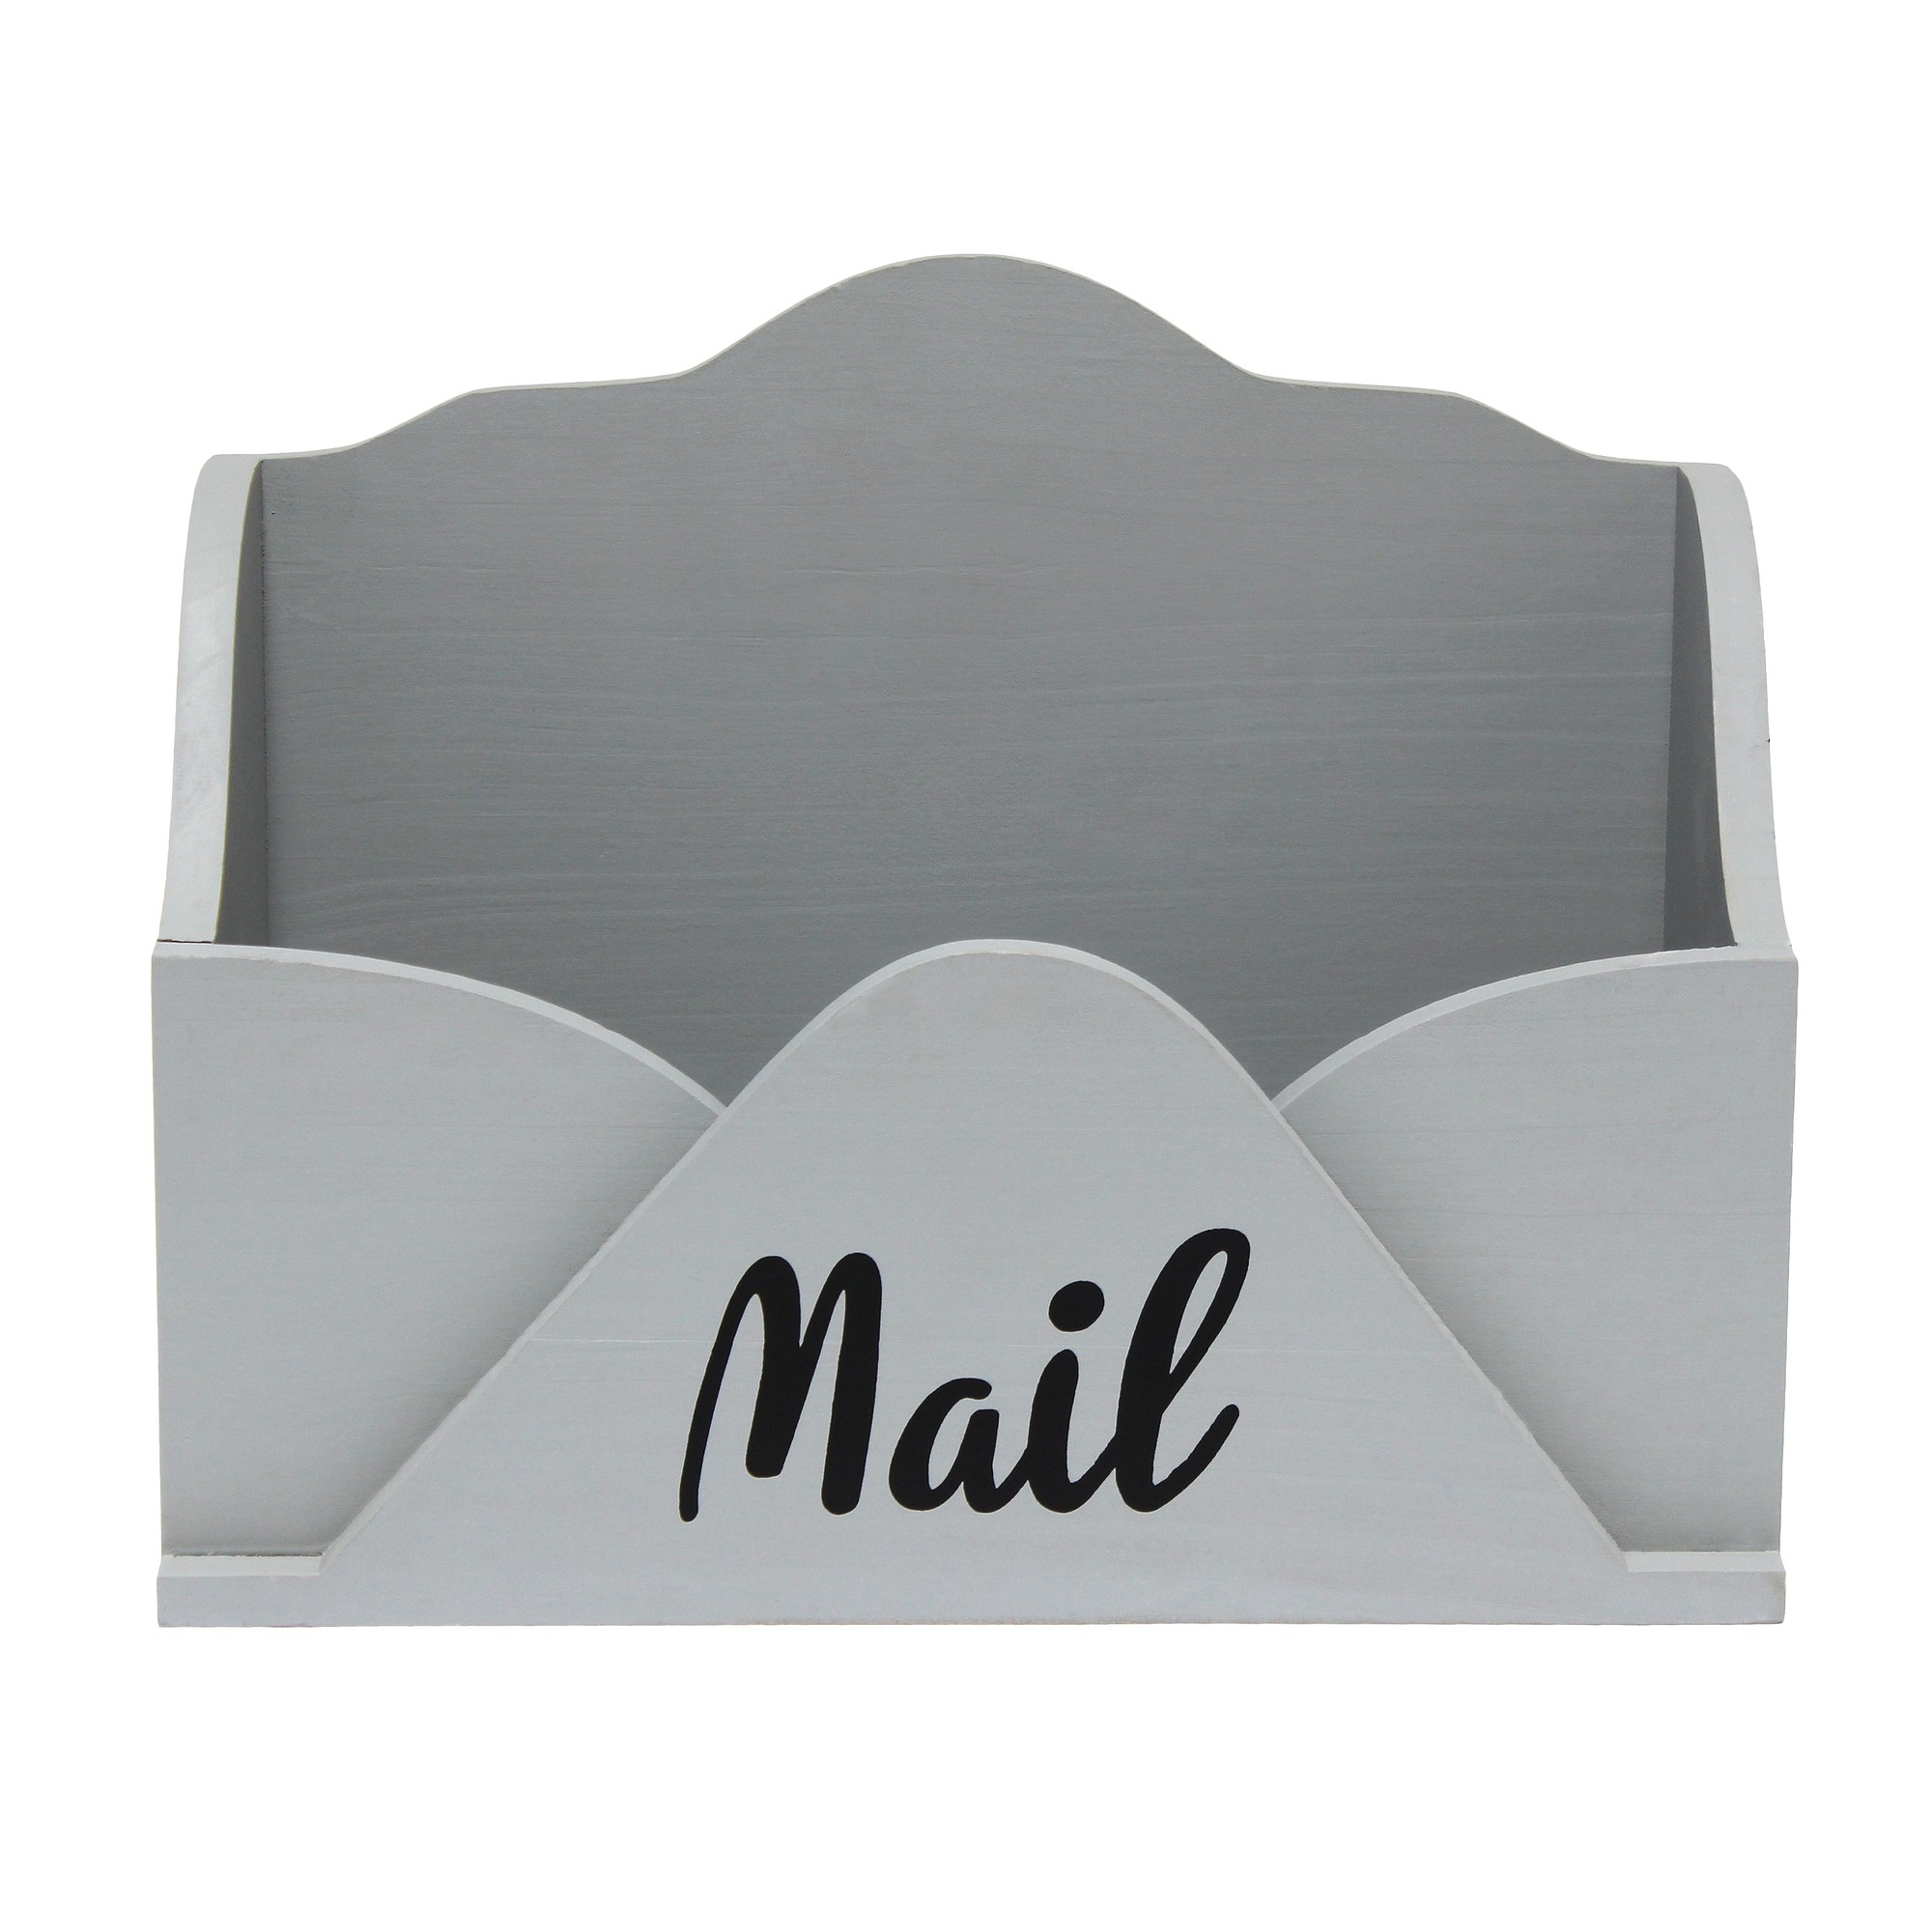 Desktop Letter Holder "Mail" Script in Black, Gray